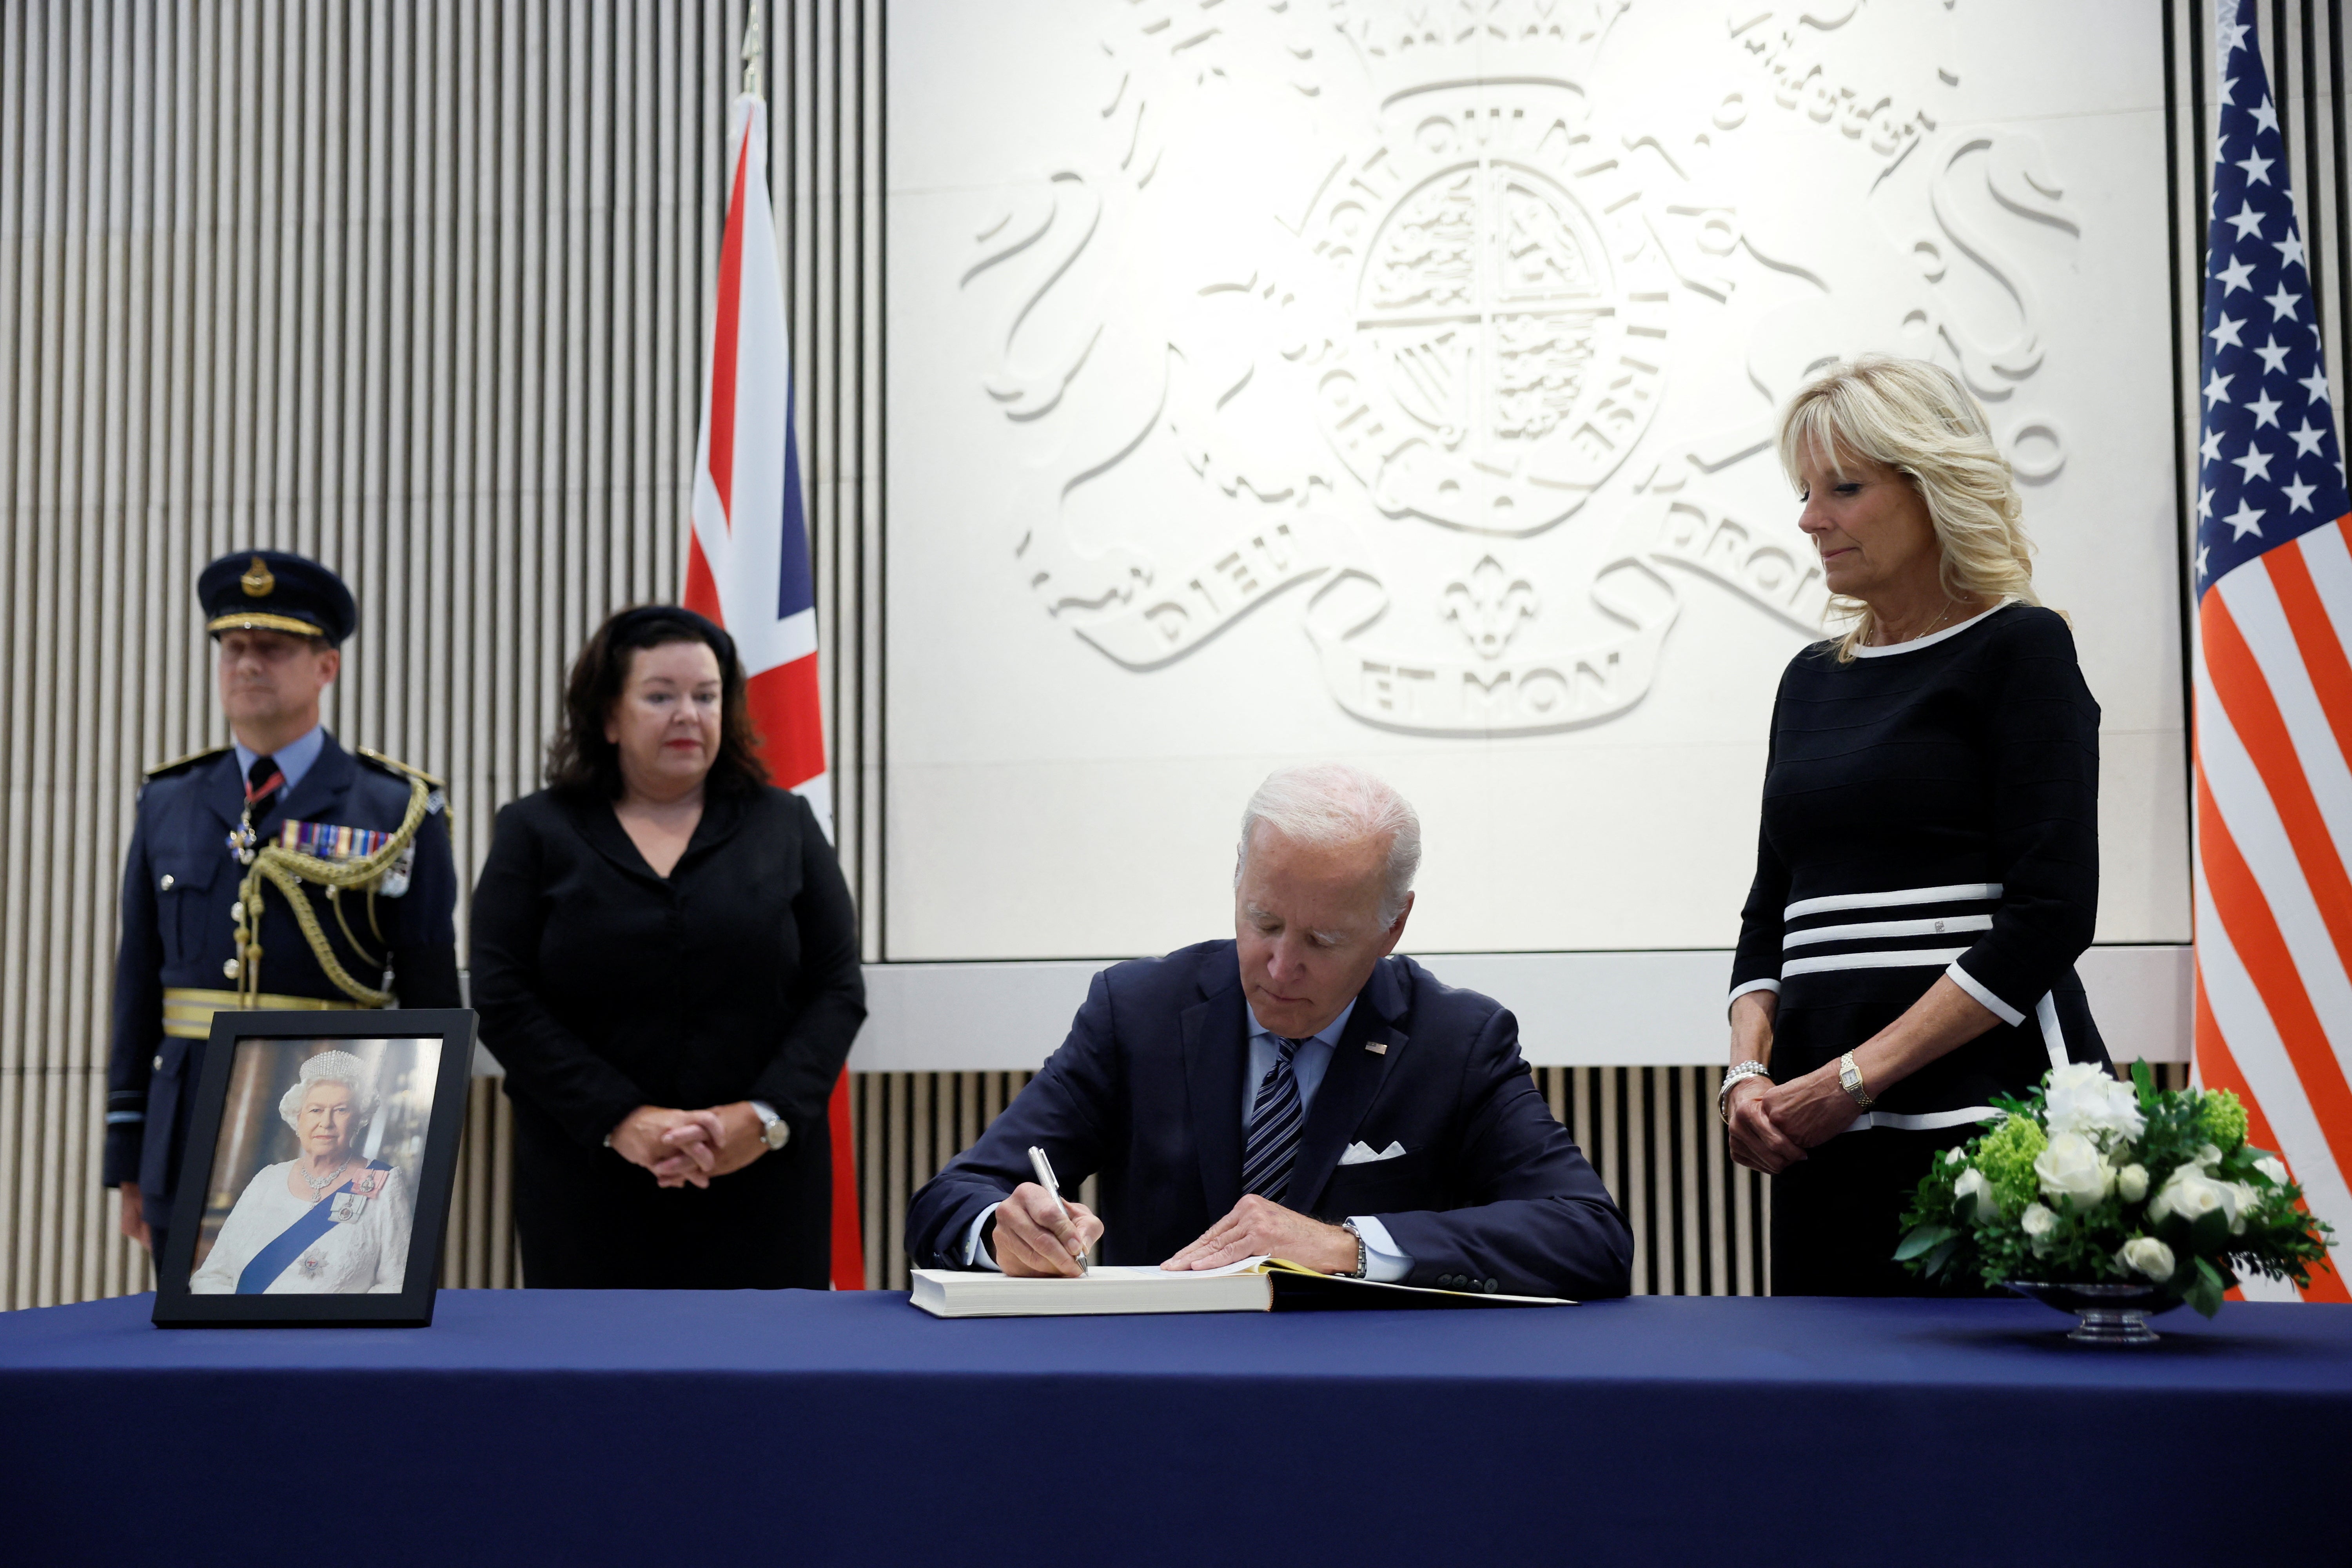 Joe Biden signs a condolence book at the UK embassy in Washington DC as first lady Jill Biden looks on